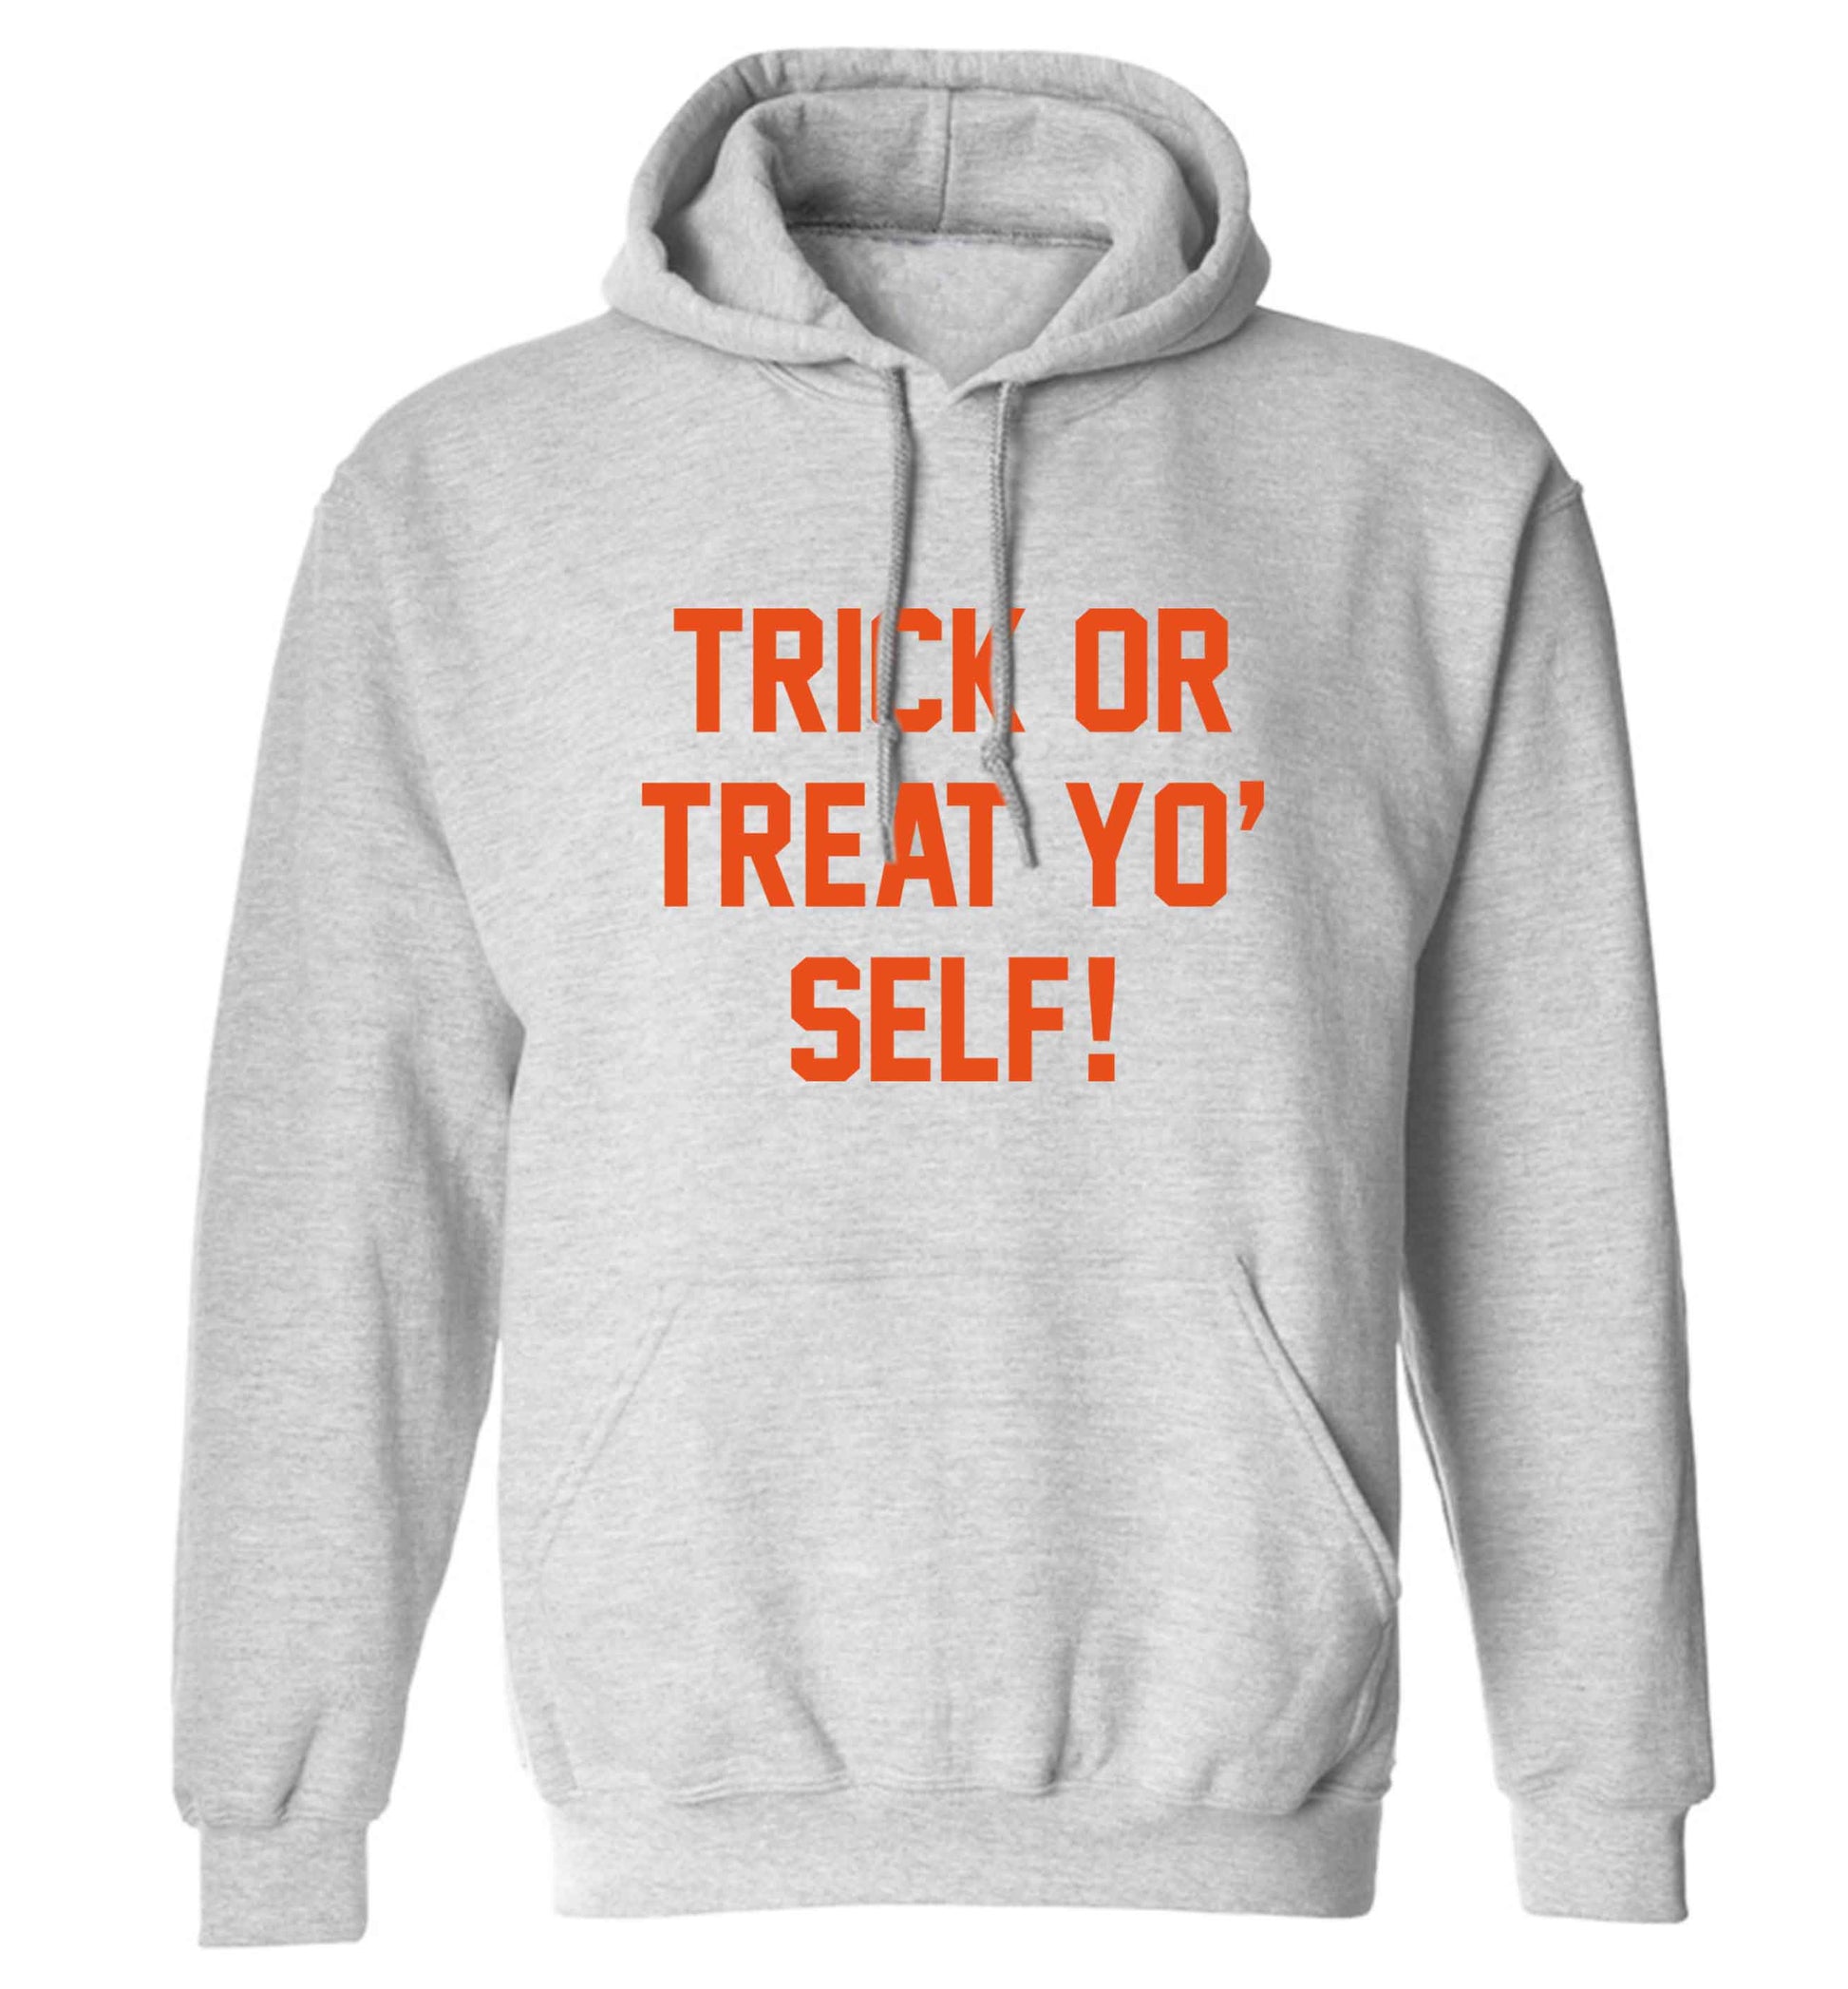 Trick or Treat Yo' Self adults unisex grey hoodie 2XL